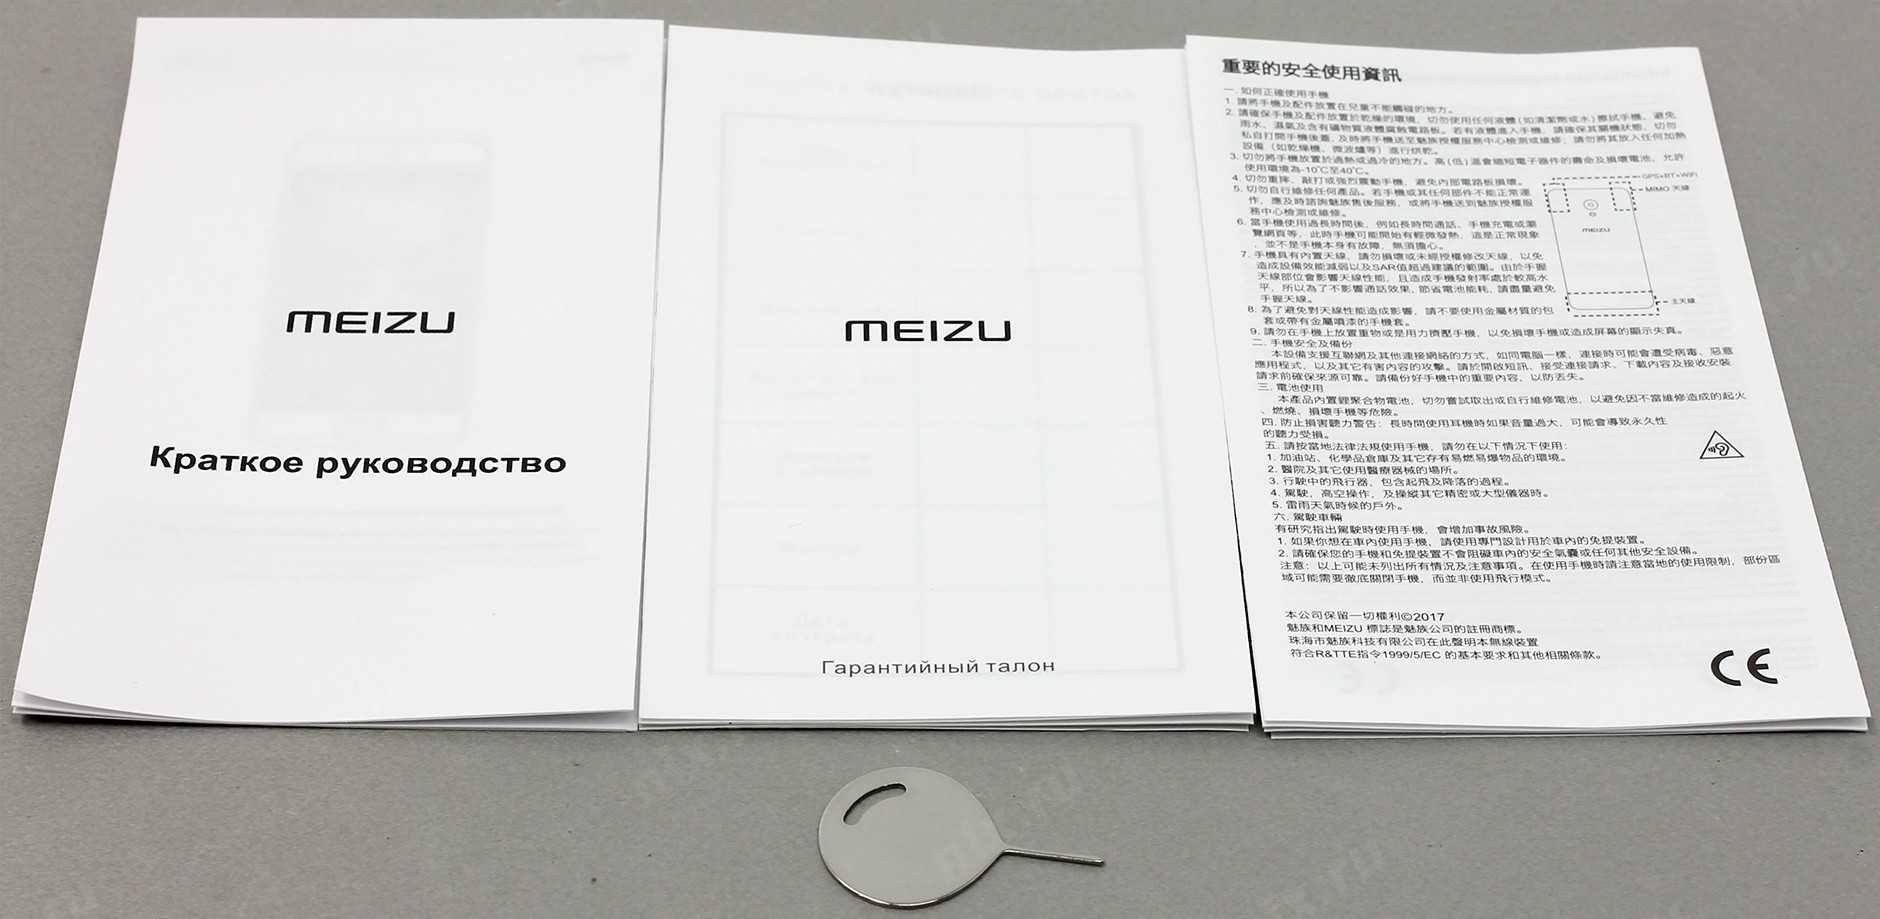 Обзор meizu m6 note - китайцы на своей волне - super g